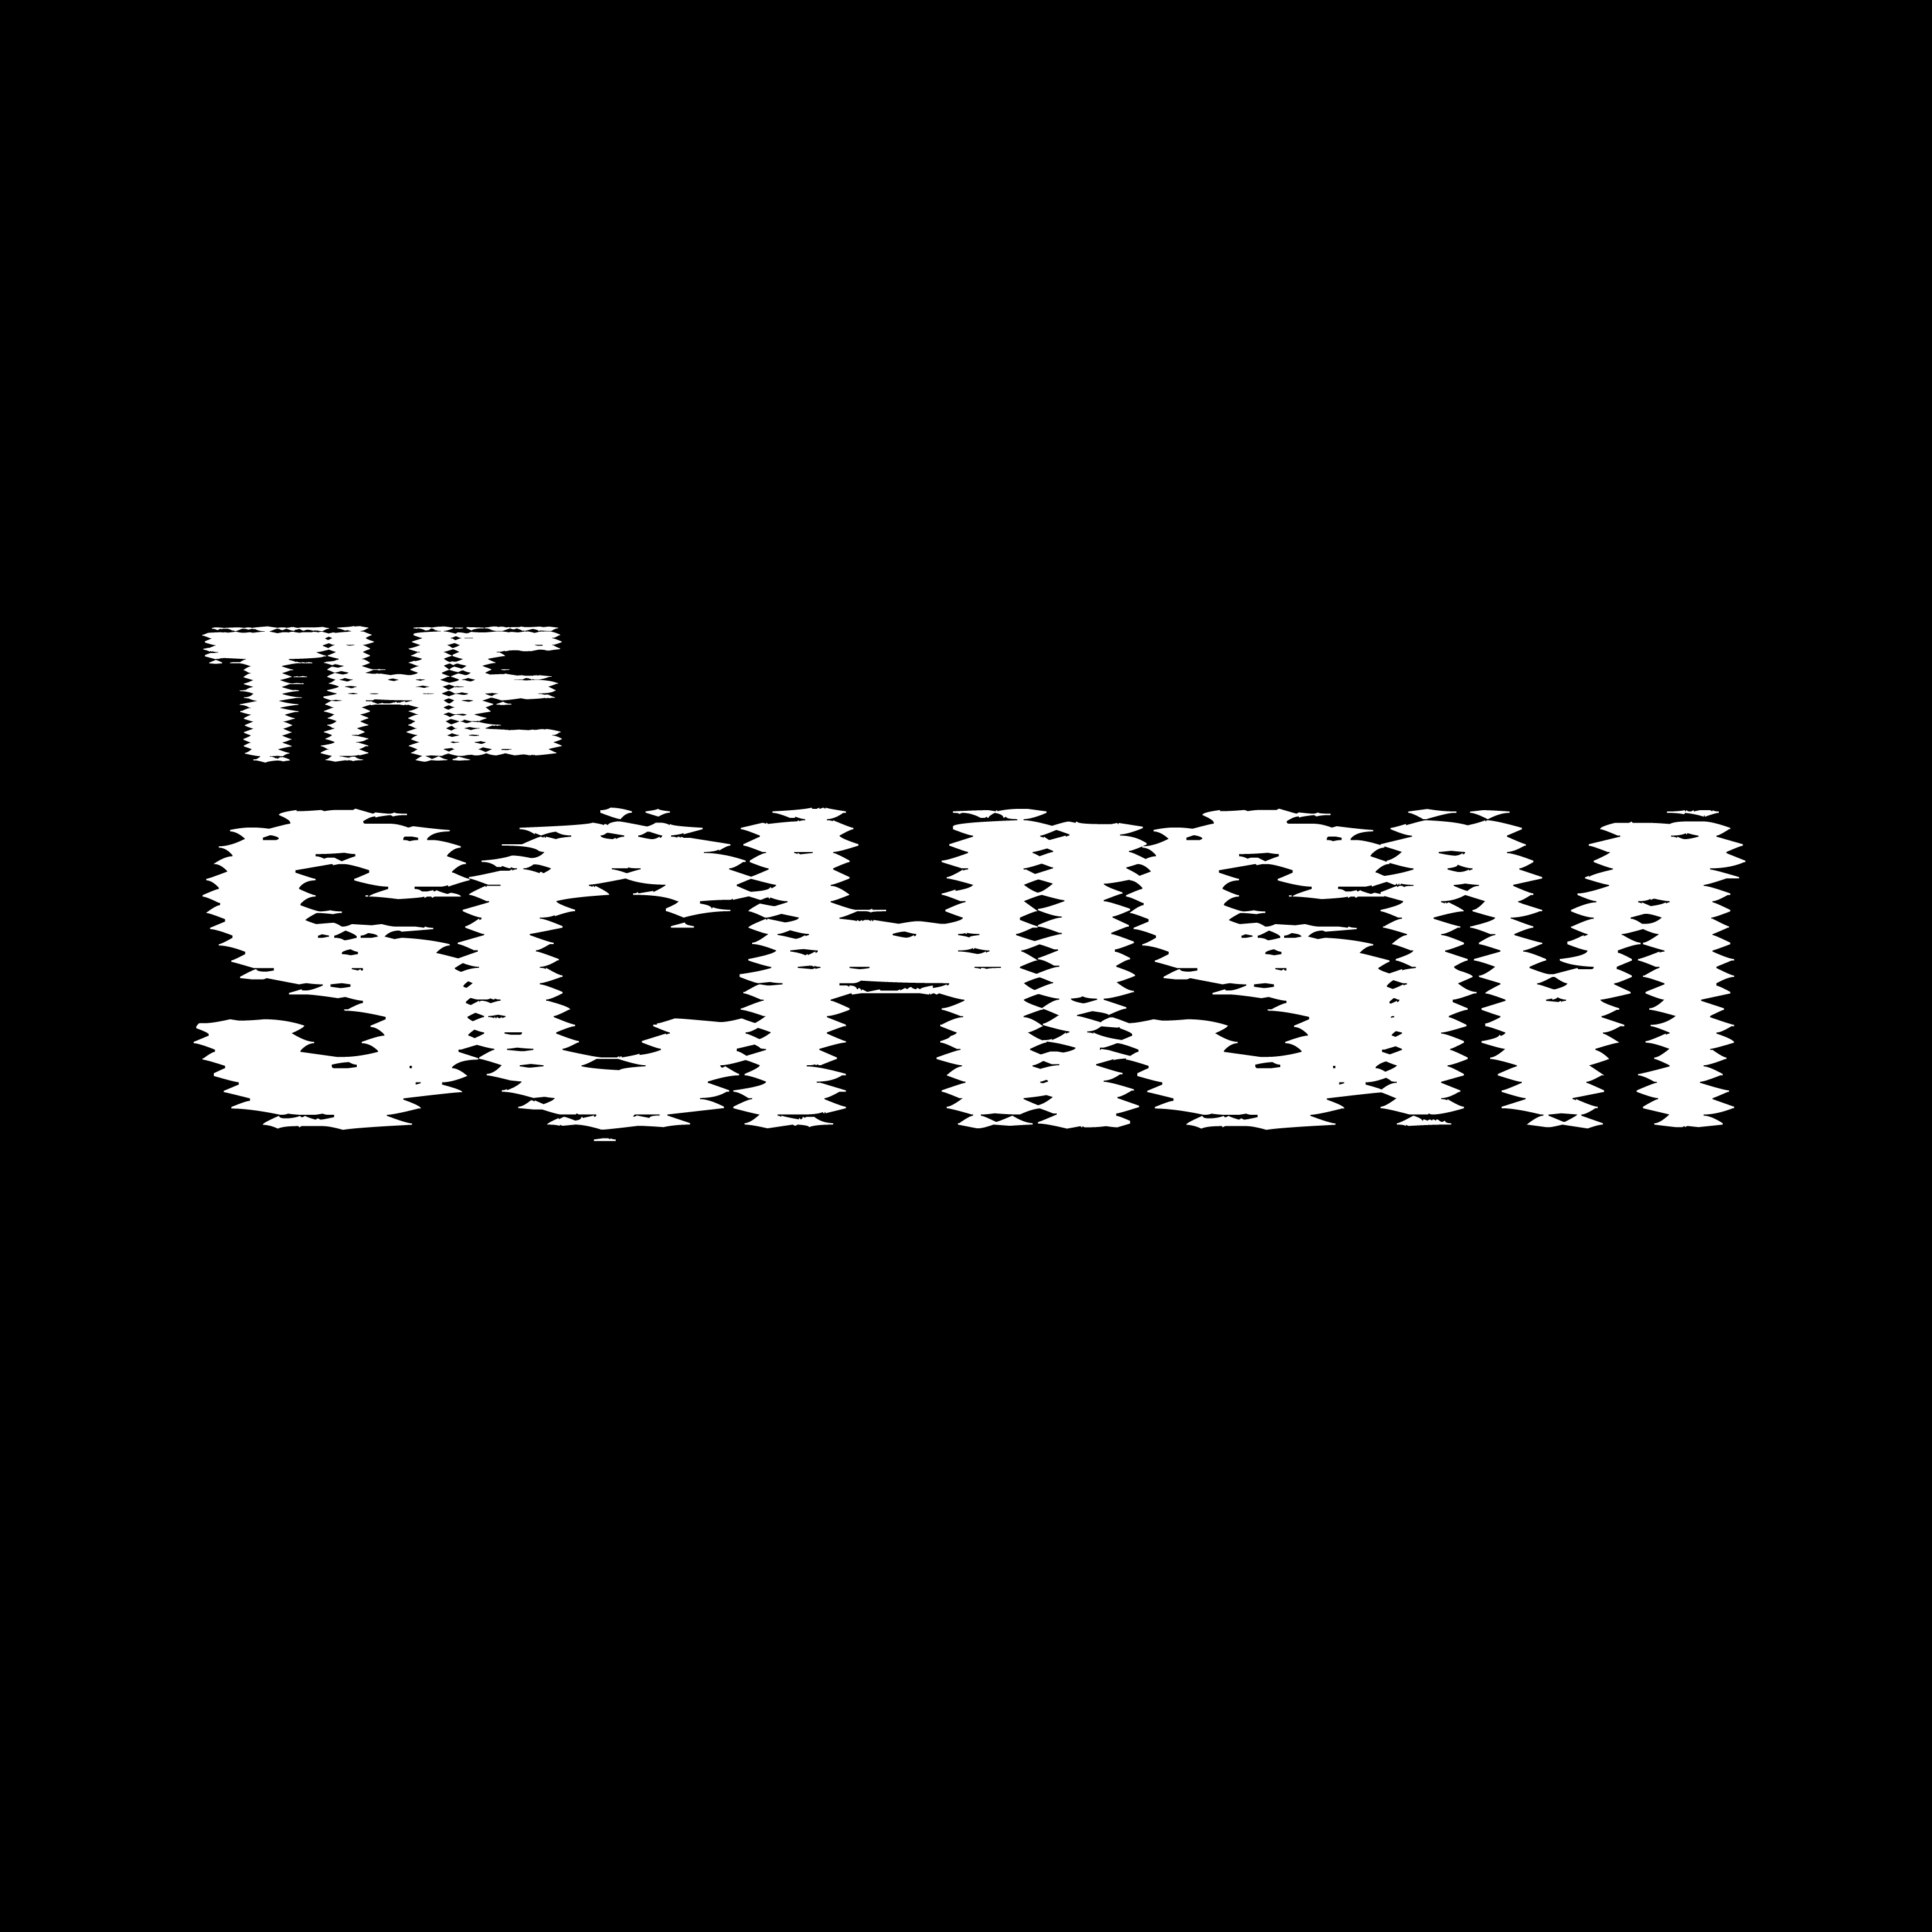 THE SCHISM